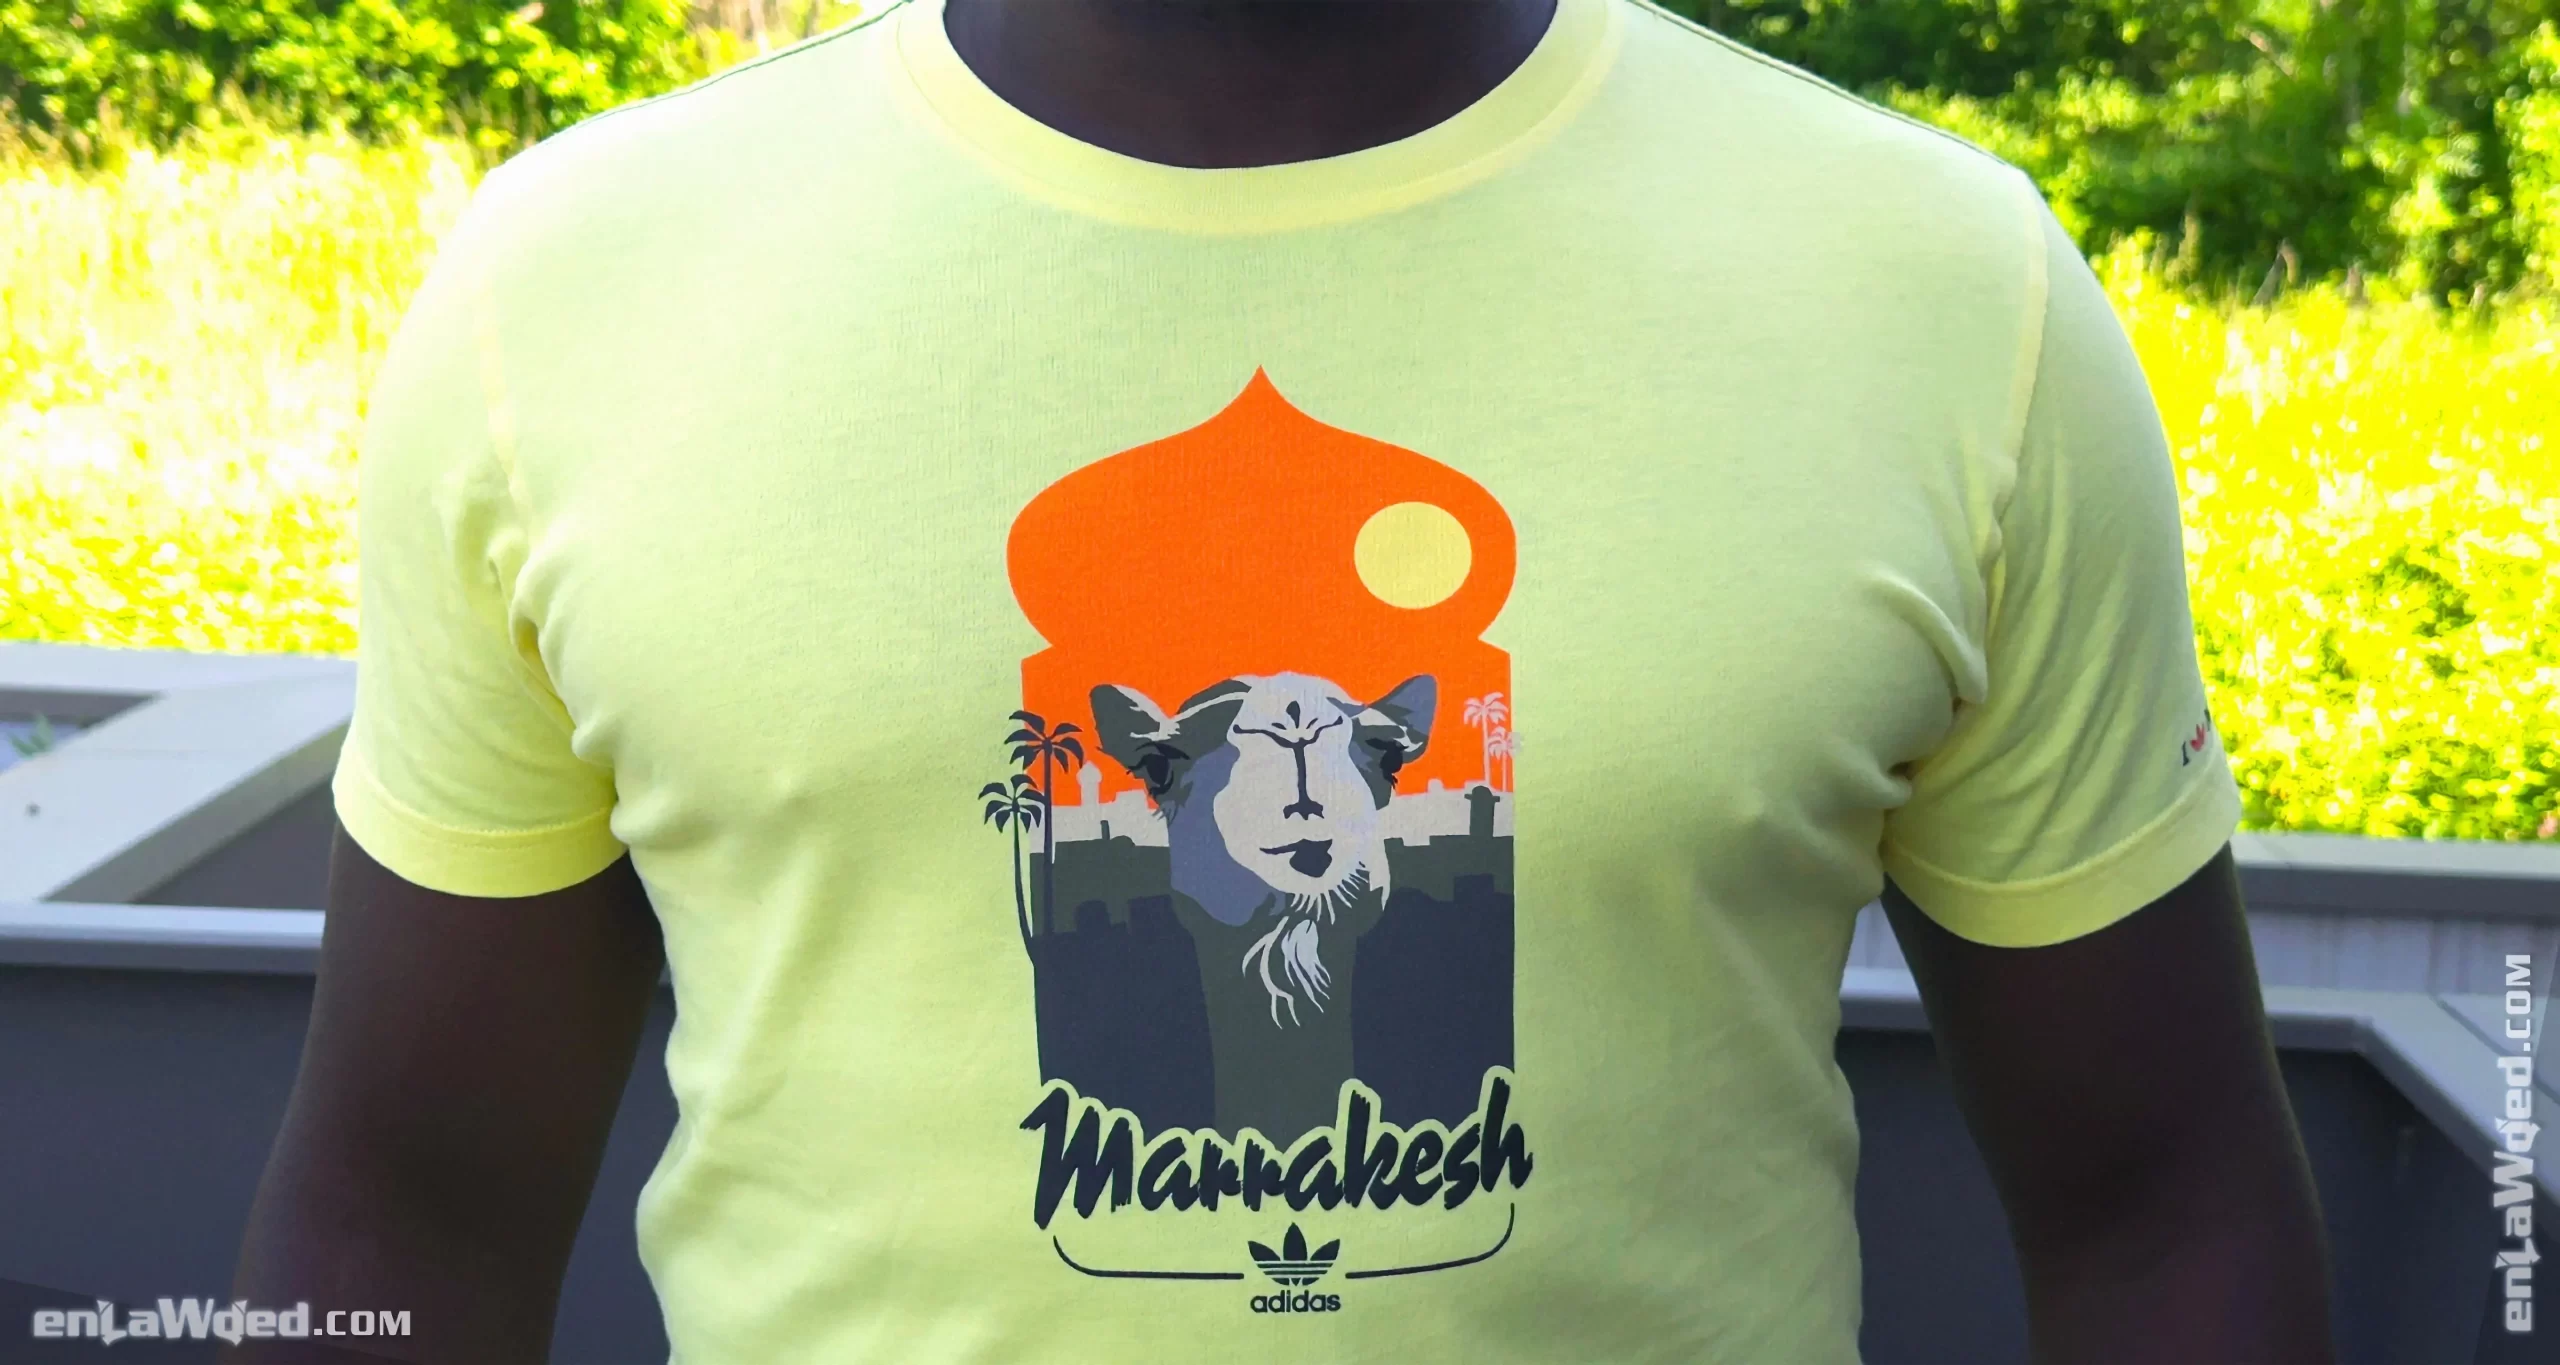 Men’s 2007 Marrakech T-Shirt by Adidas Originals: Light (EnLawded.com file #lmc5njpssxp0dafujyi)